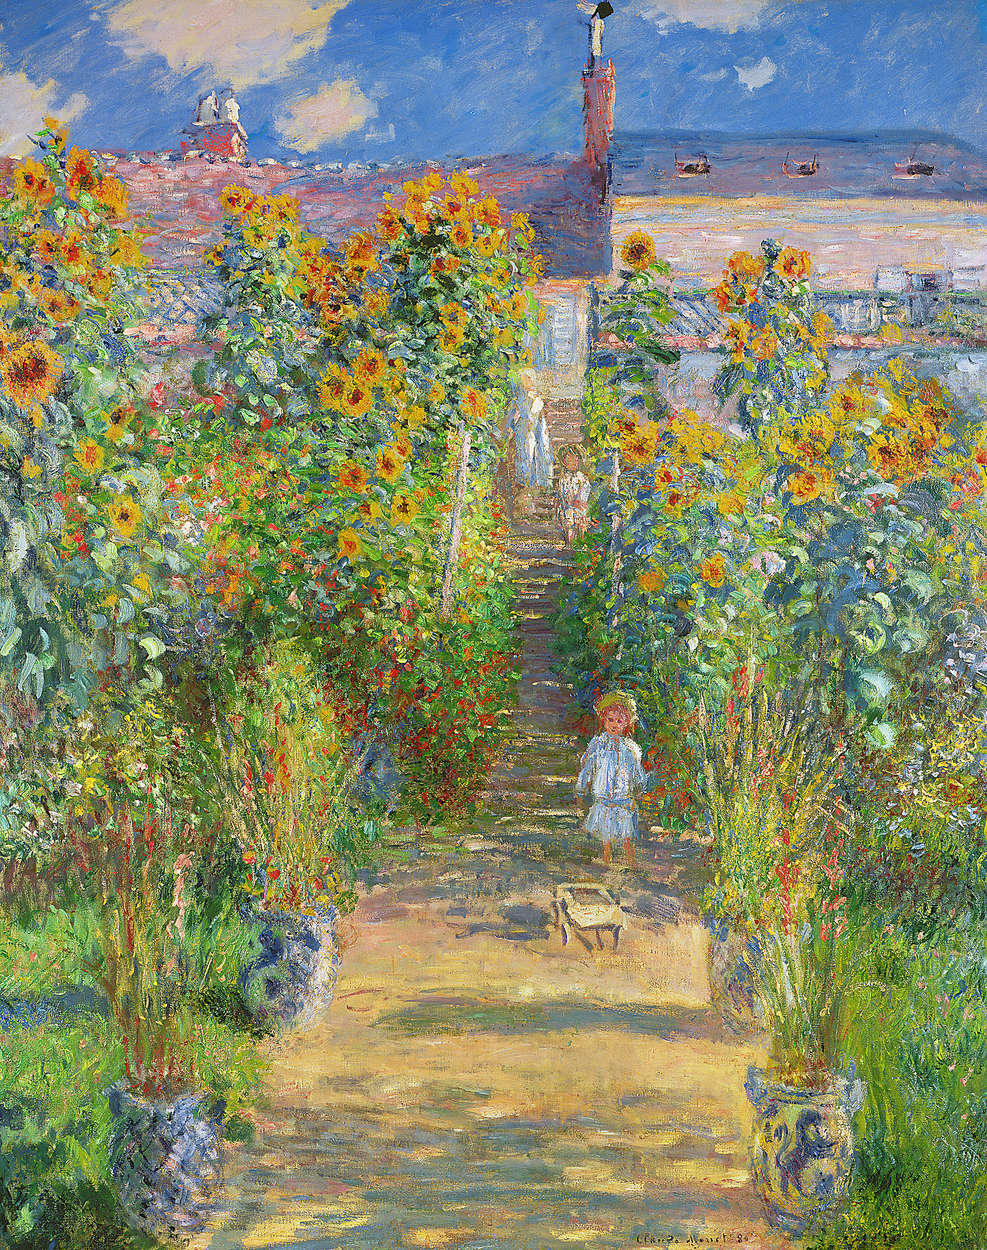             Photo wallpaper "The artist's garden in Vetheuil" by Claude Monet
        